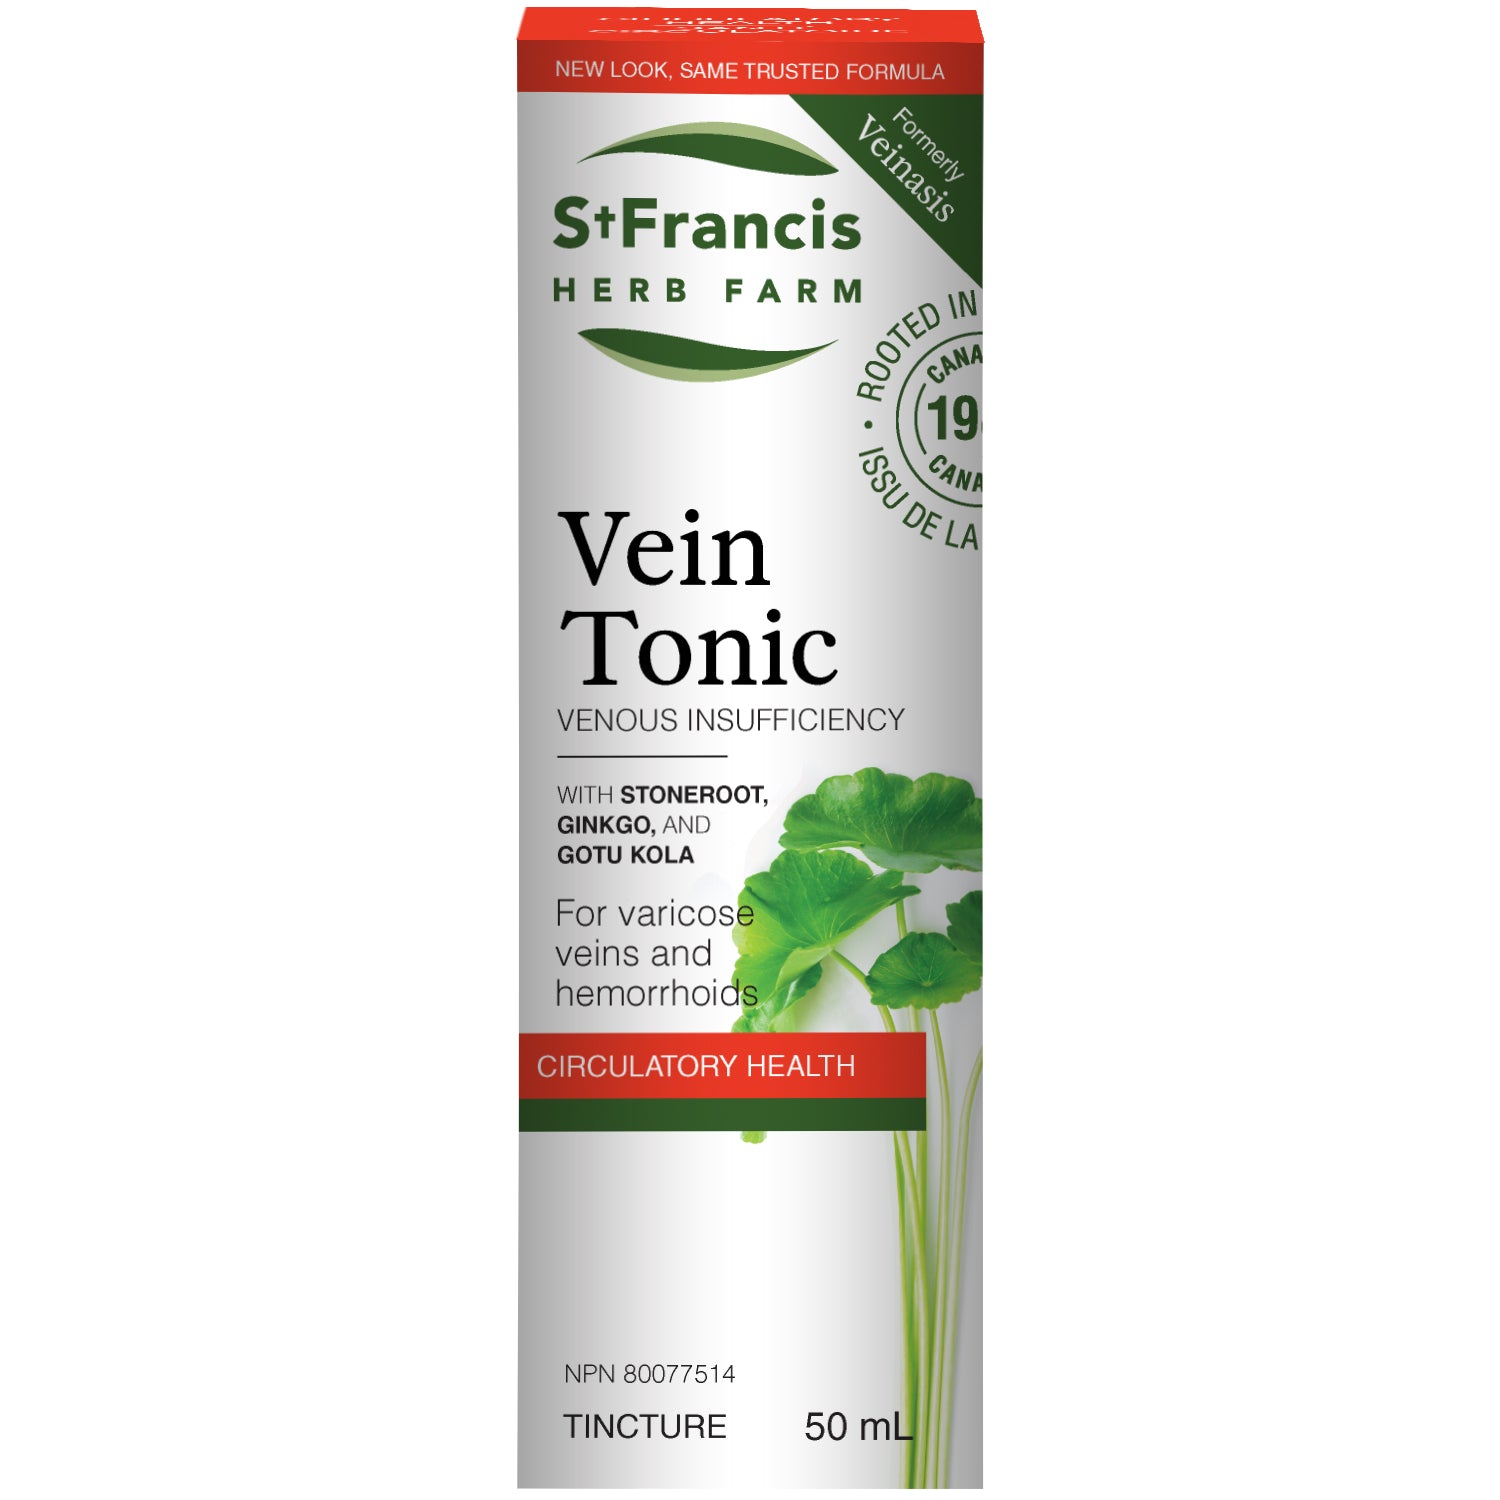 St. Francis Vein Tonic Tincture 50ml (Formerly Veinasis)